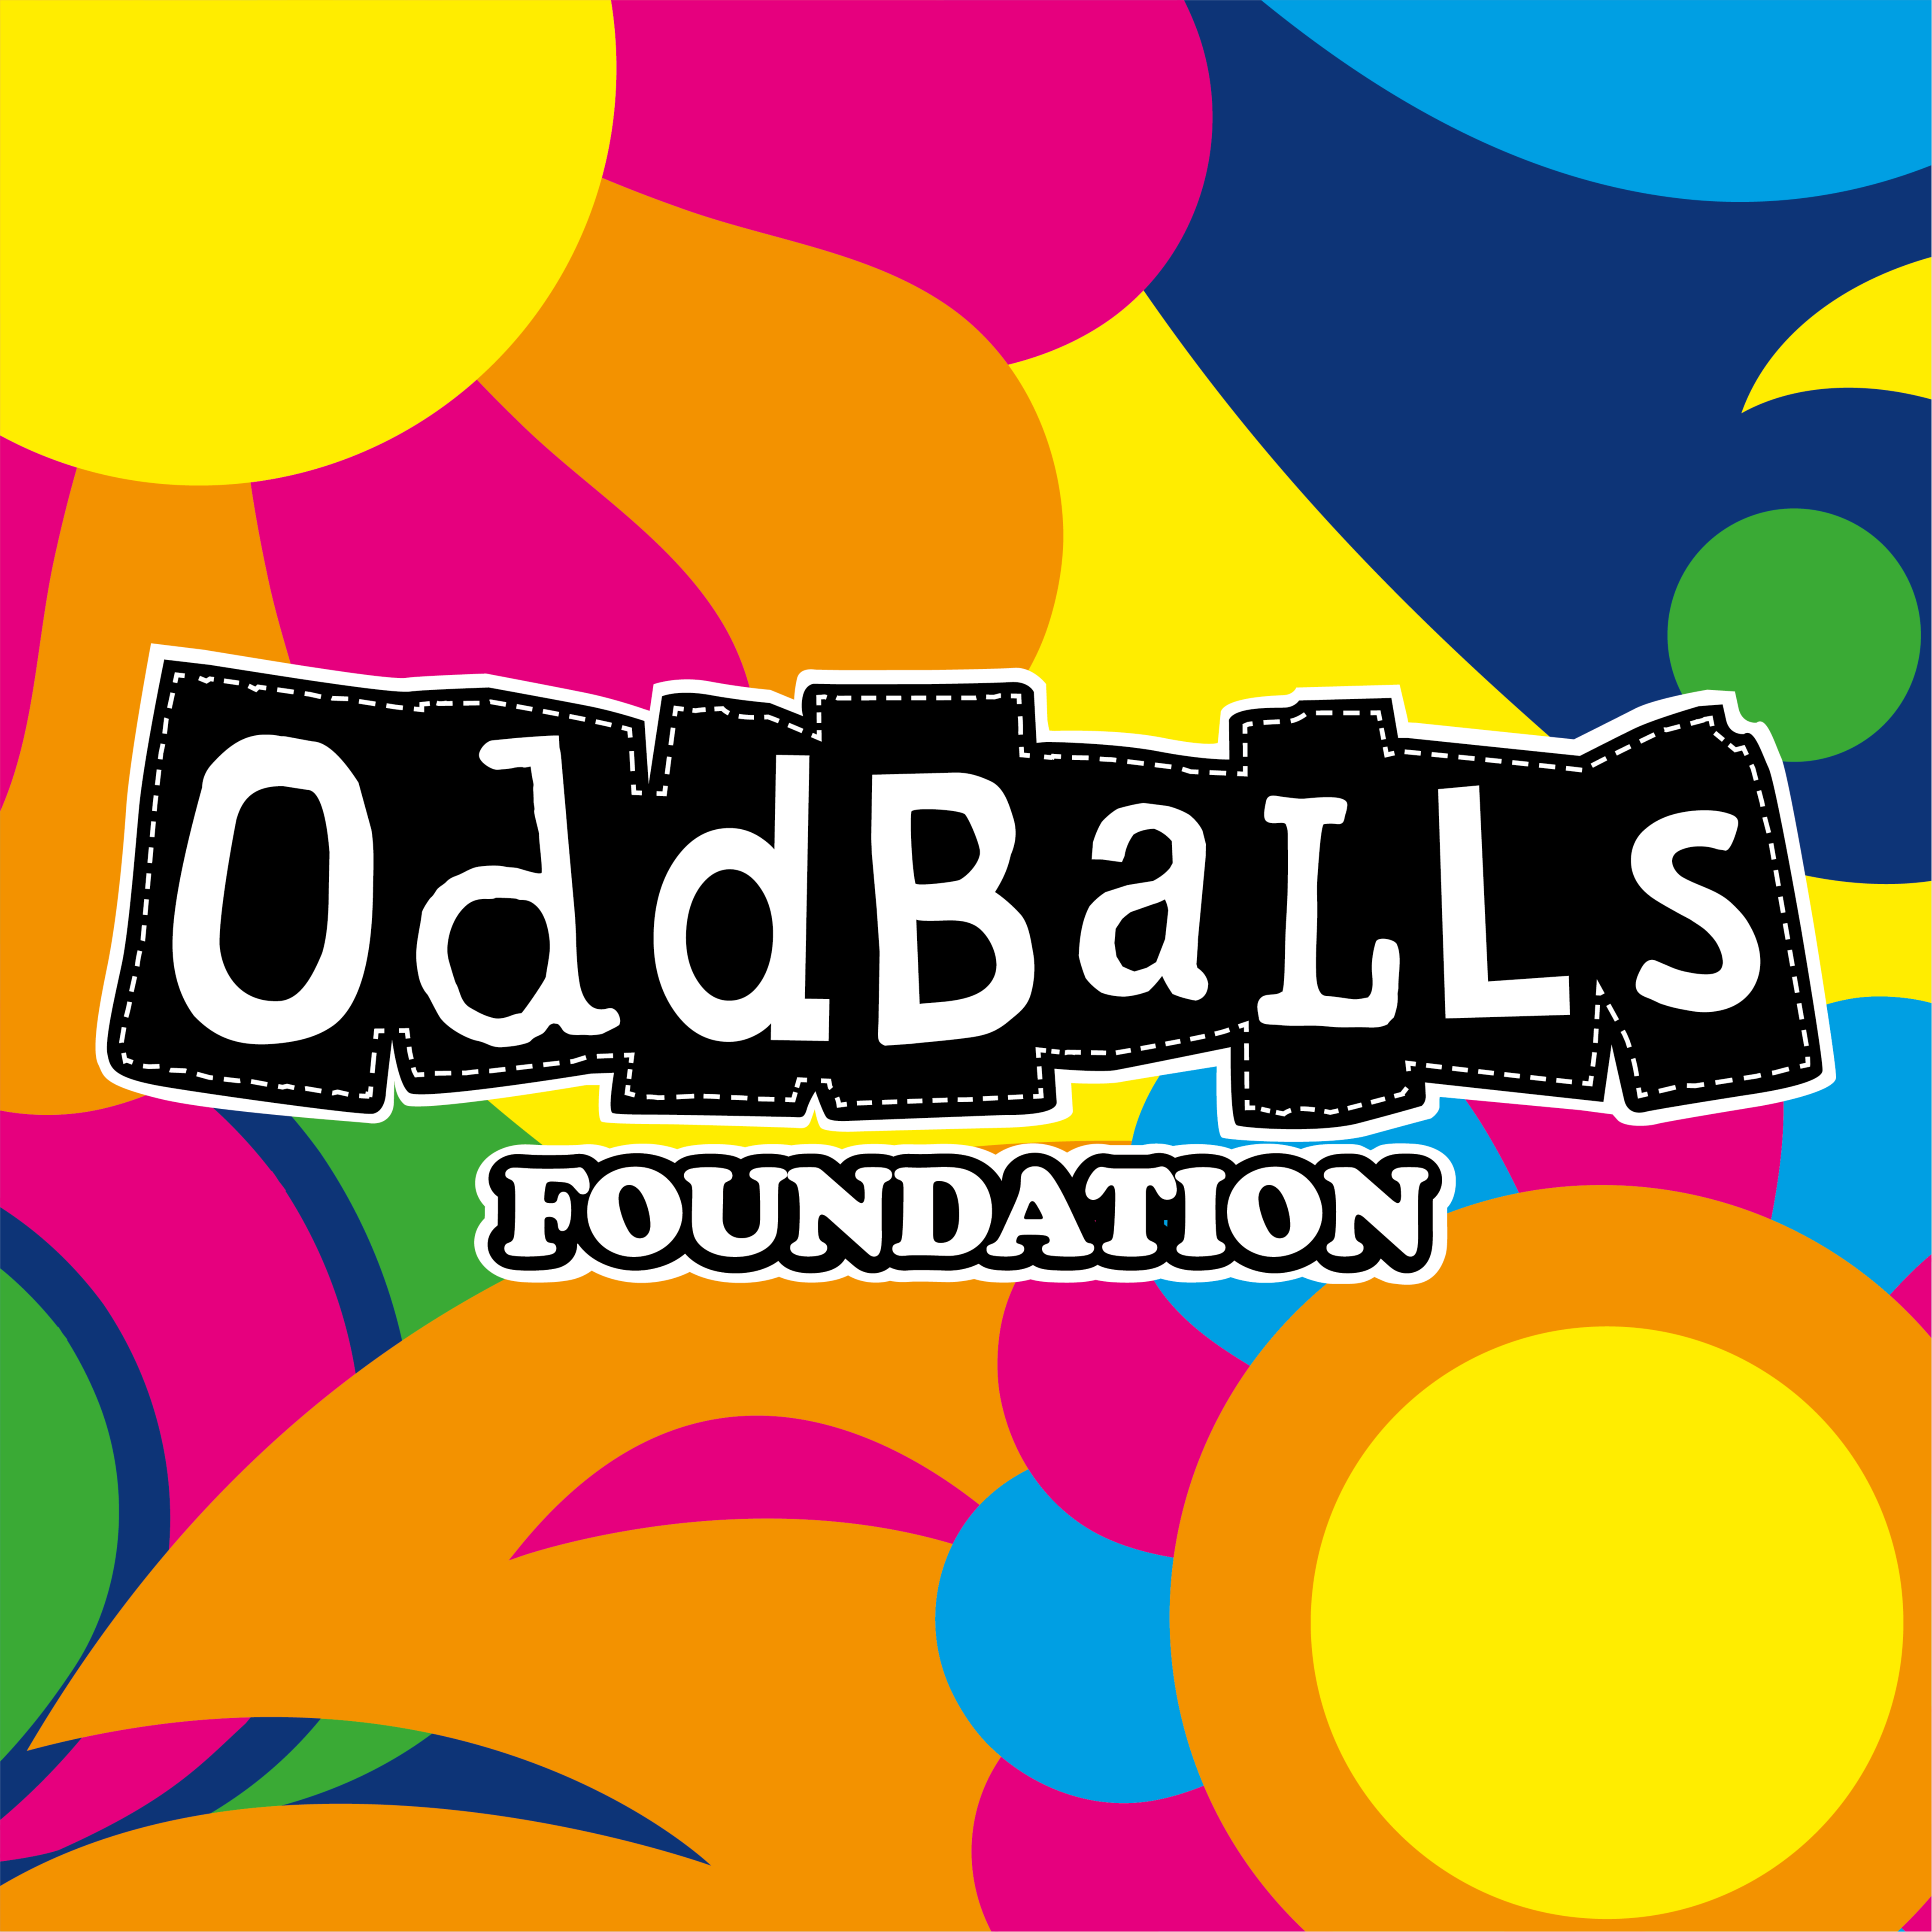 The OddBalls Foundation logo